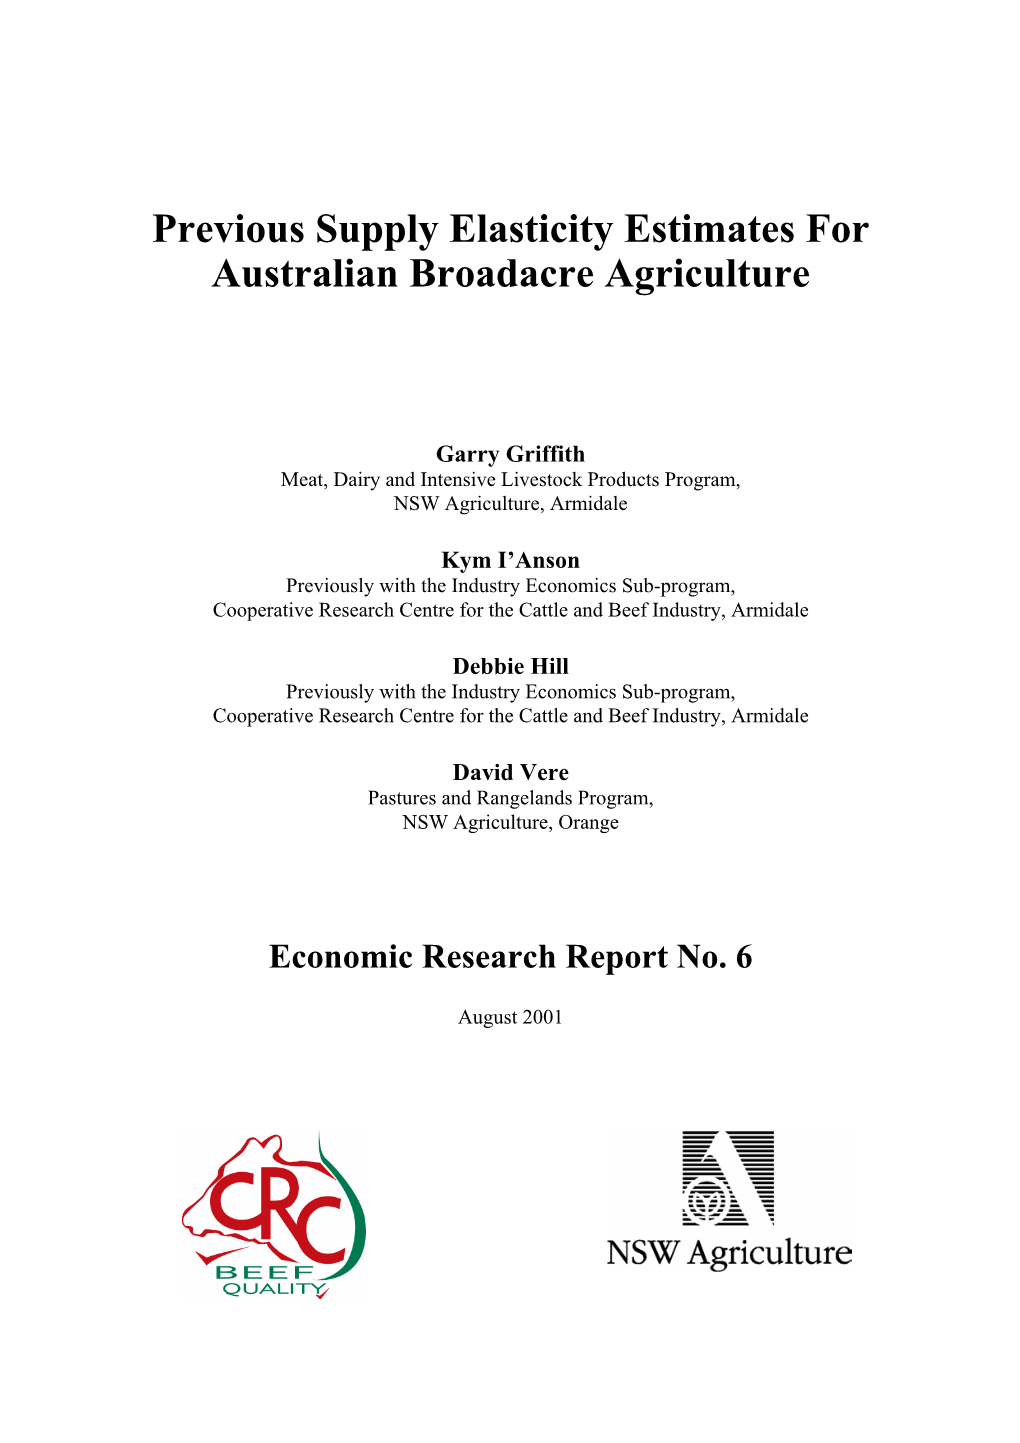 Previous Supply Elasticity Estimates for Australian Broadacre Agriculture